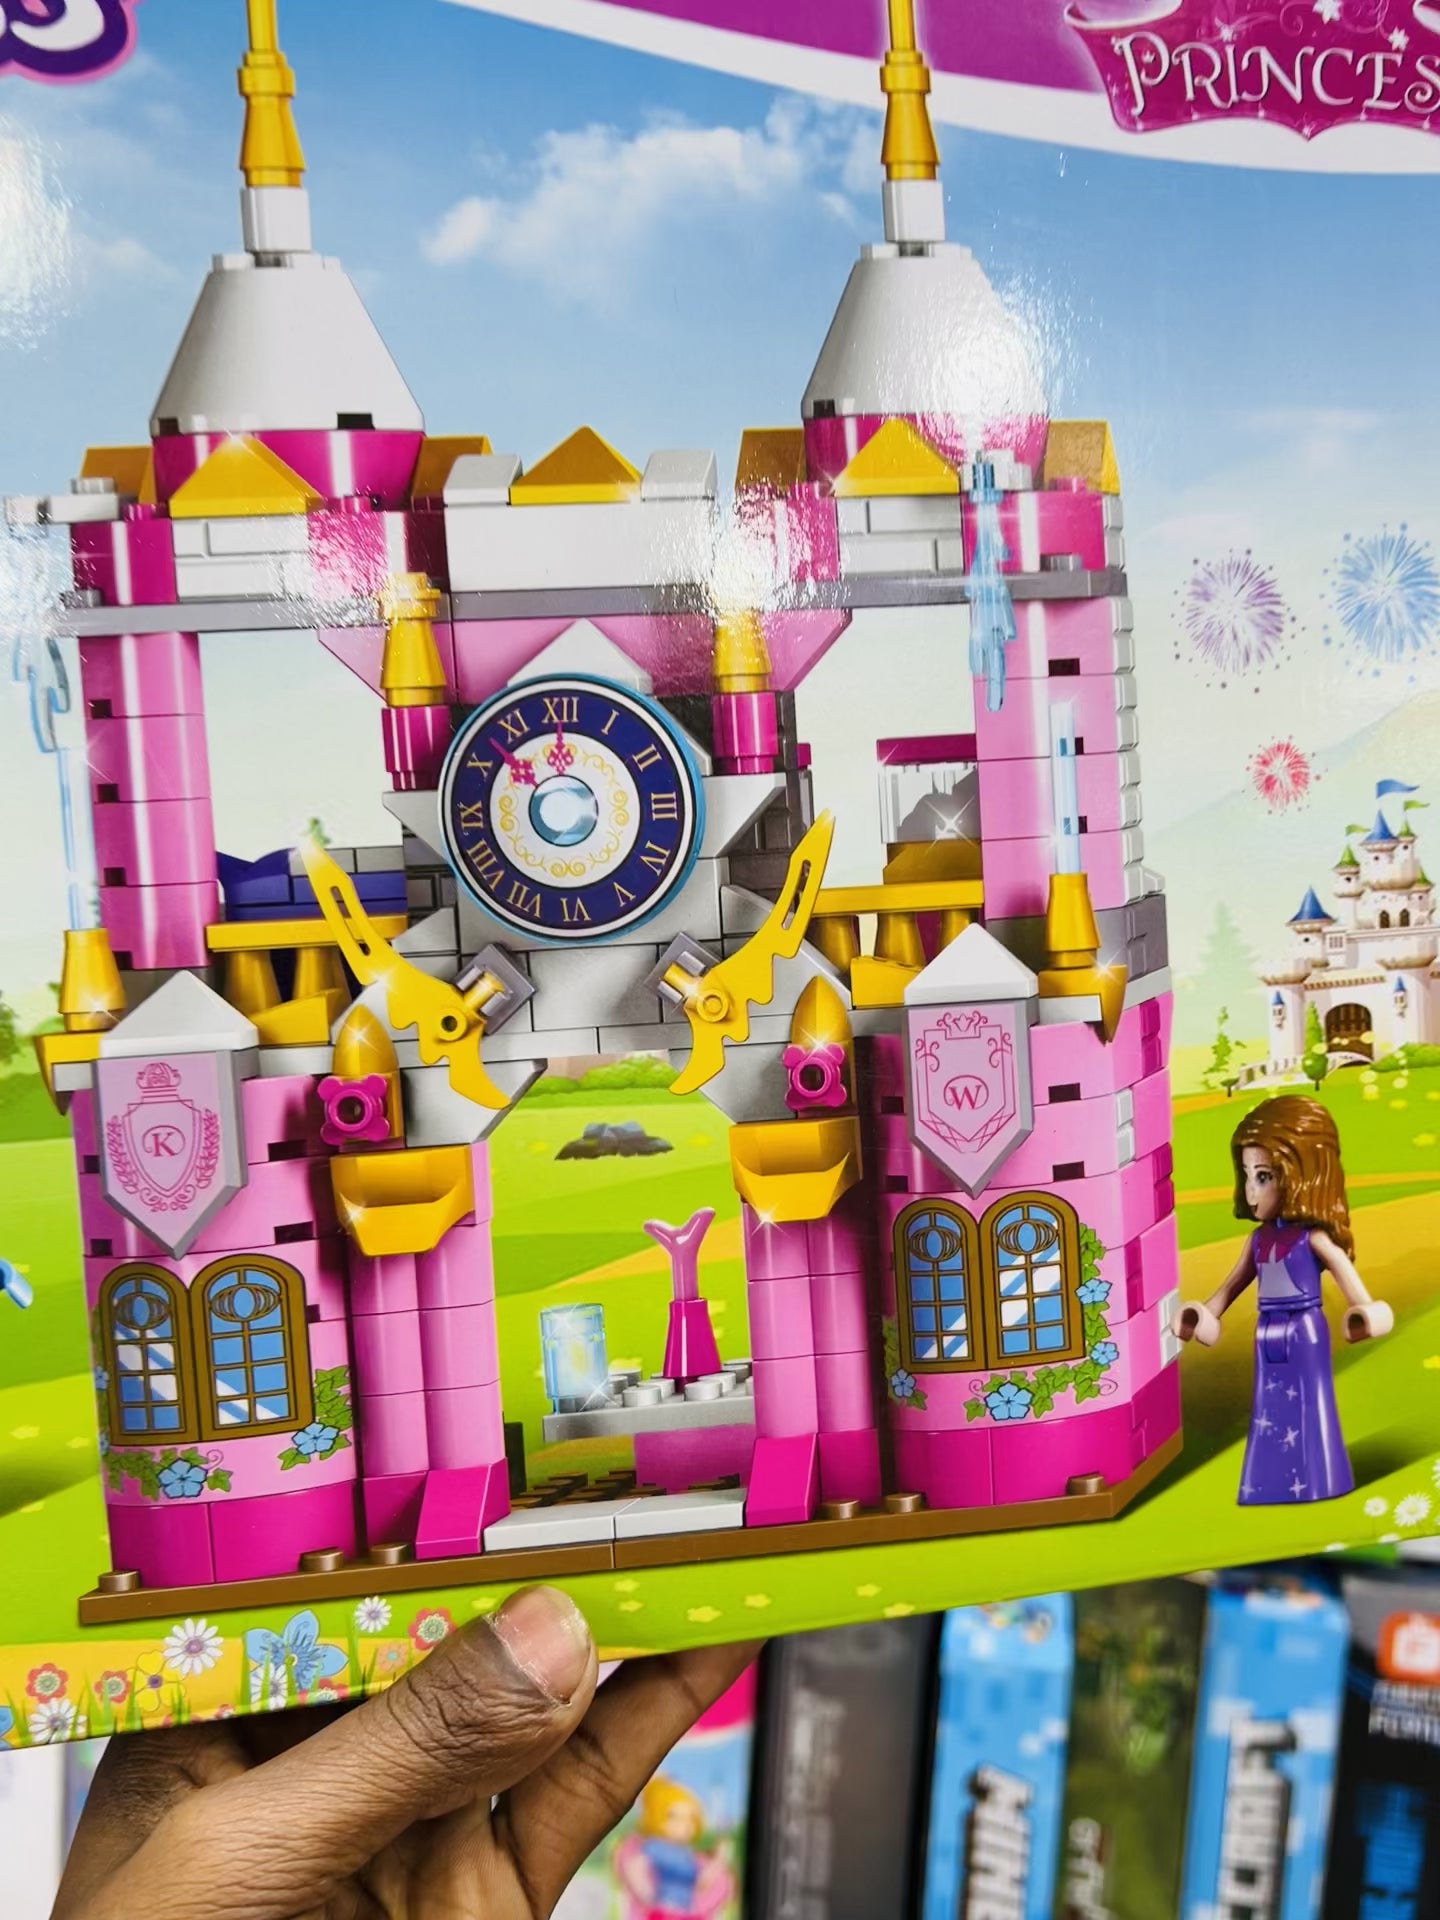 Lego-Like, Happy Princess Fairytale castle with clock Blocks - 331 pieces - 6-14 years